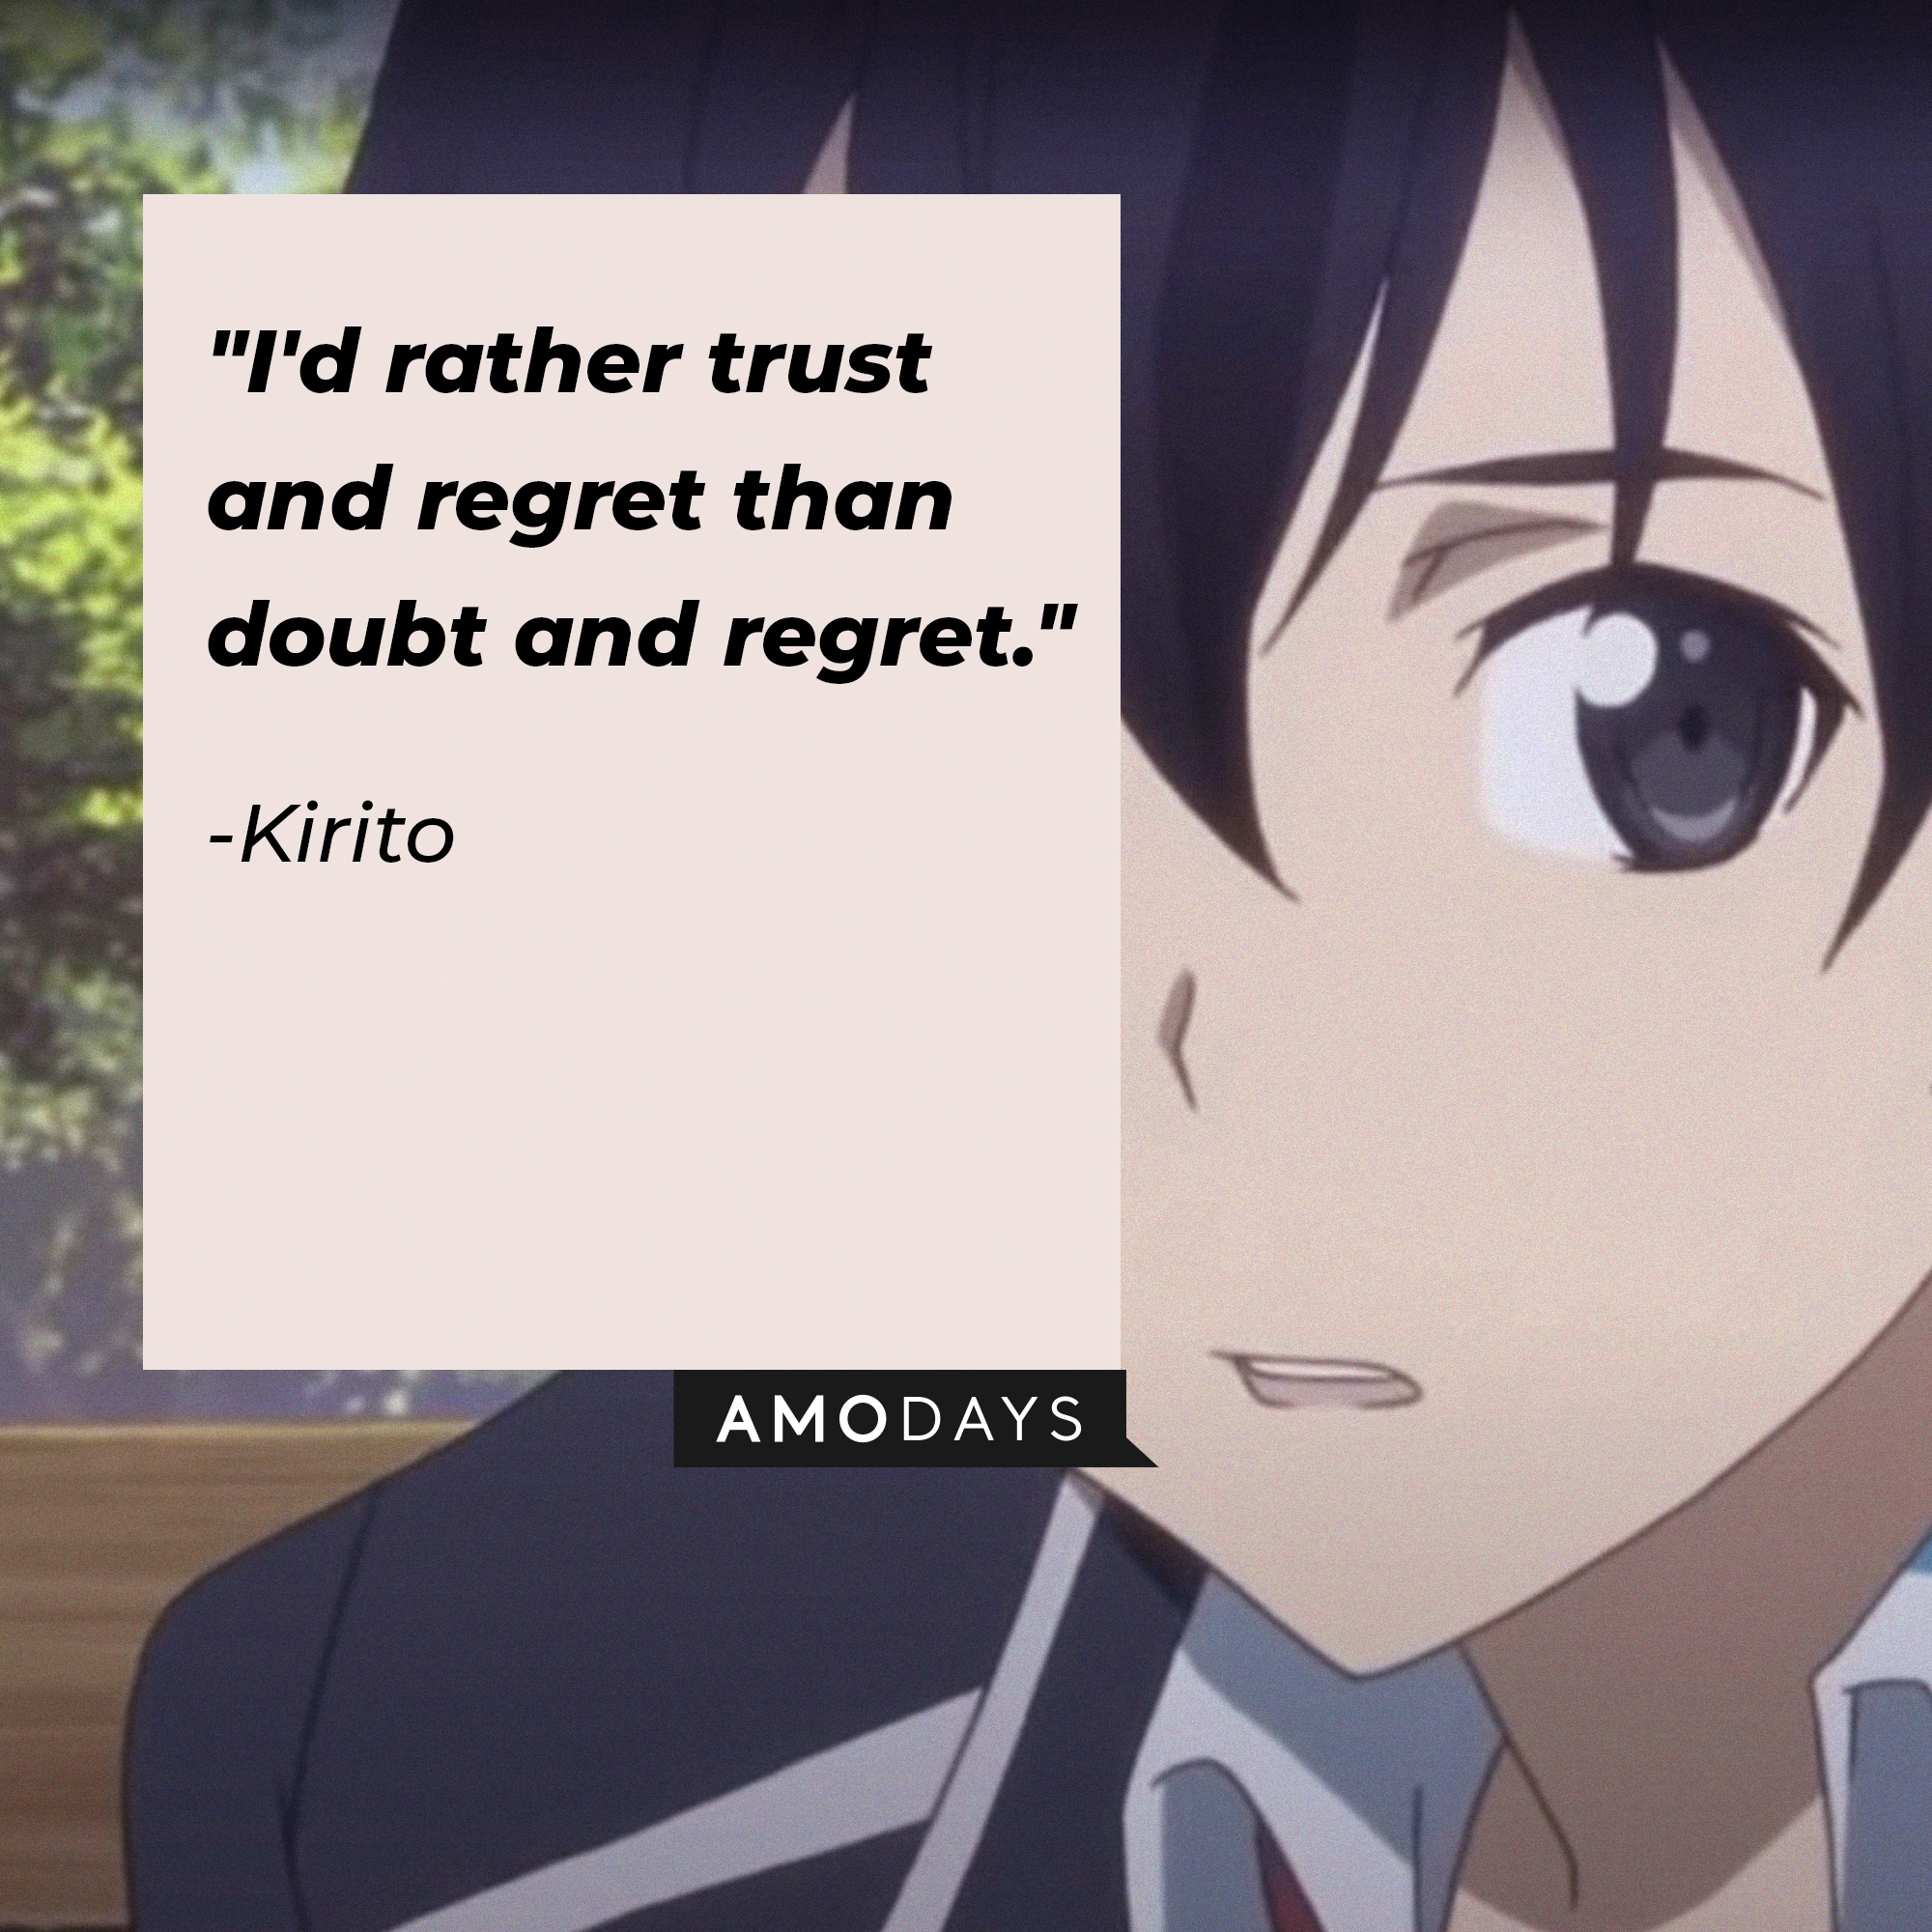 Kirito's quote: "I'd rather trust and regret than doubt and regret." | Source: Facebook.com/SwordArtOnlineUSA